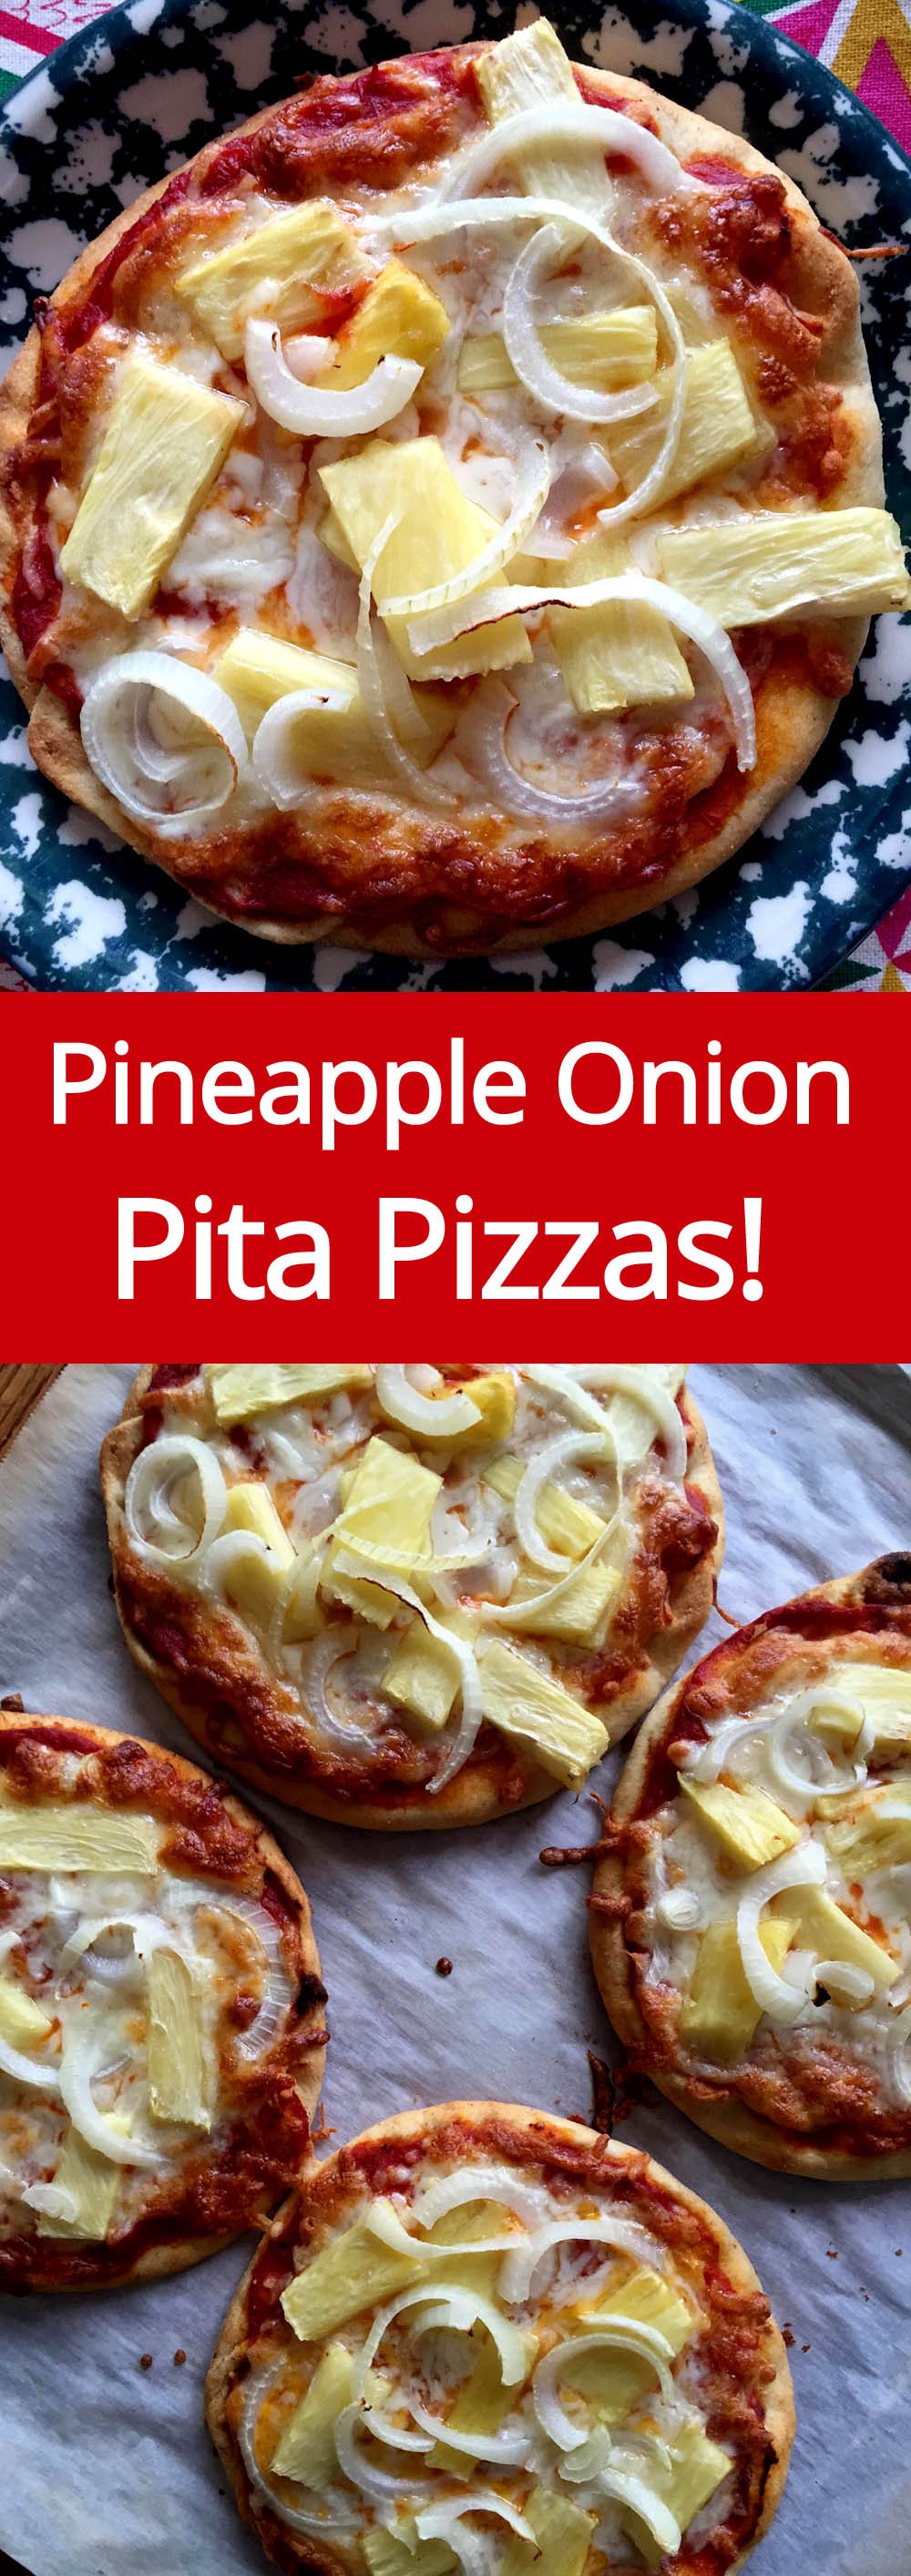 Pineapple Onion Pita Pizza Recipe - super easy way to make individual pizzas!